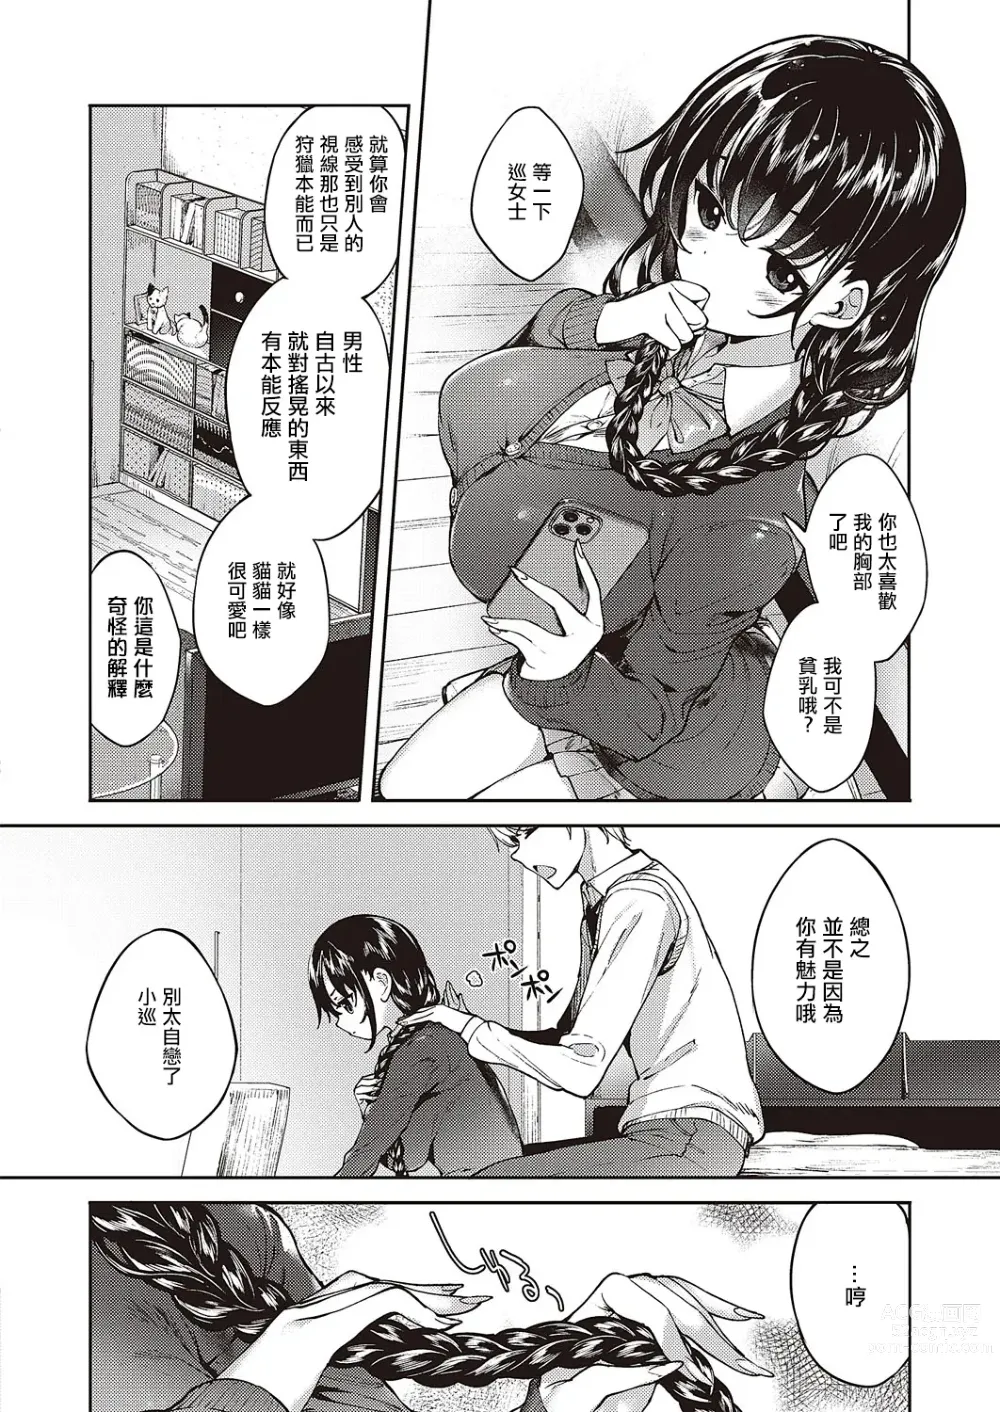 Page 8 of manga めぐりどころ 1歩